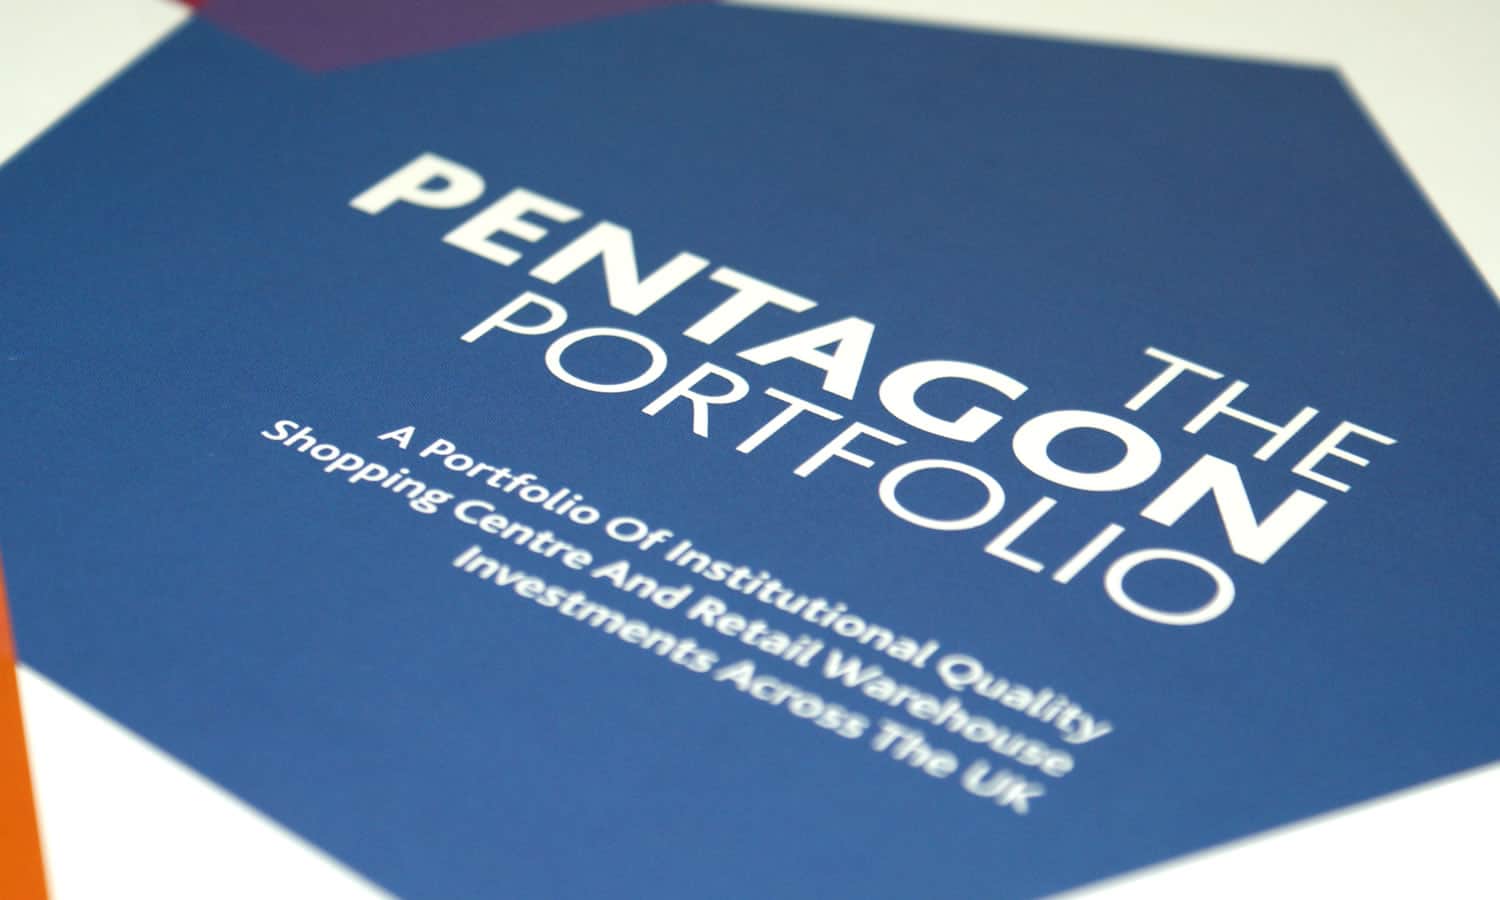 The Pentagon Portfolio